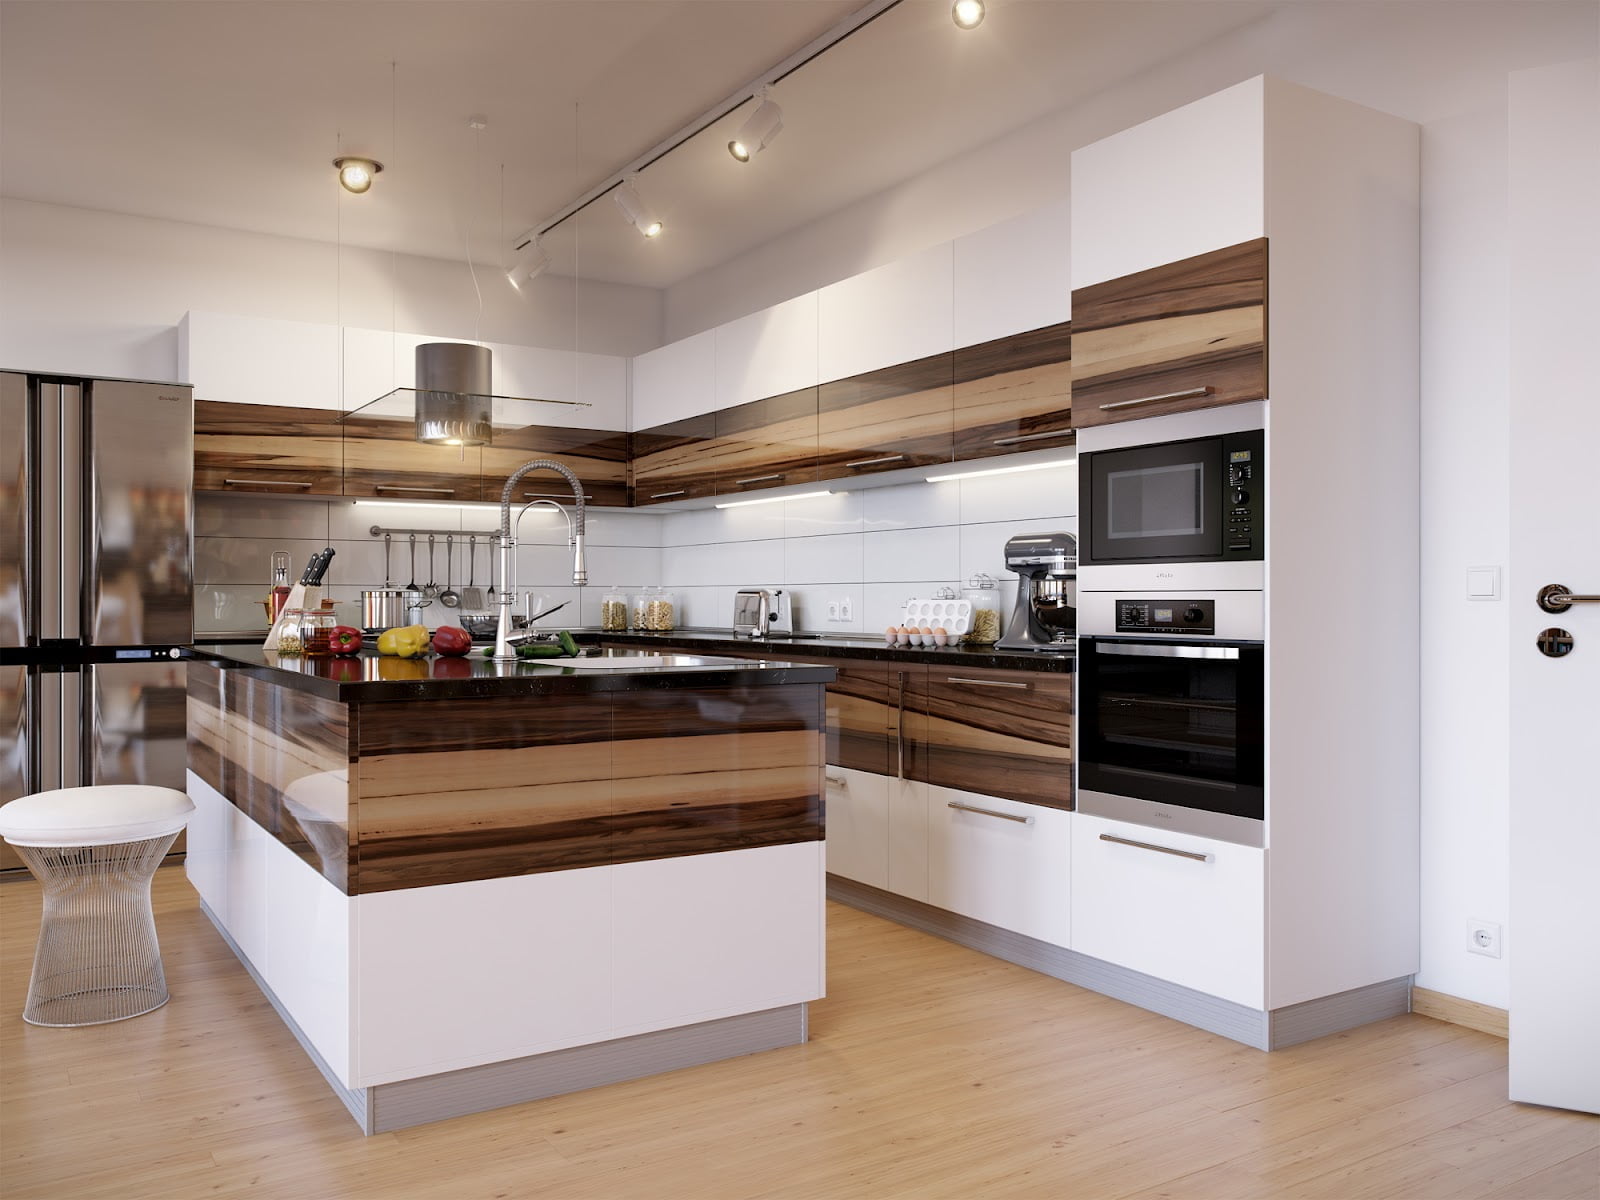 Kitchen Design Tips For The Galley Kitchen Island